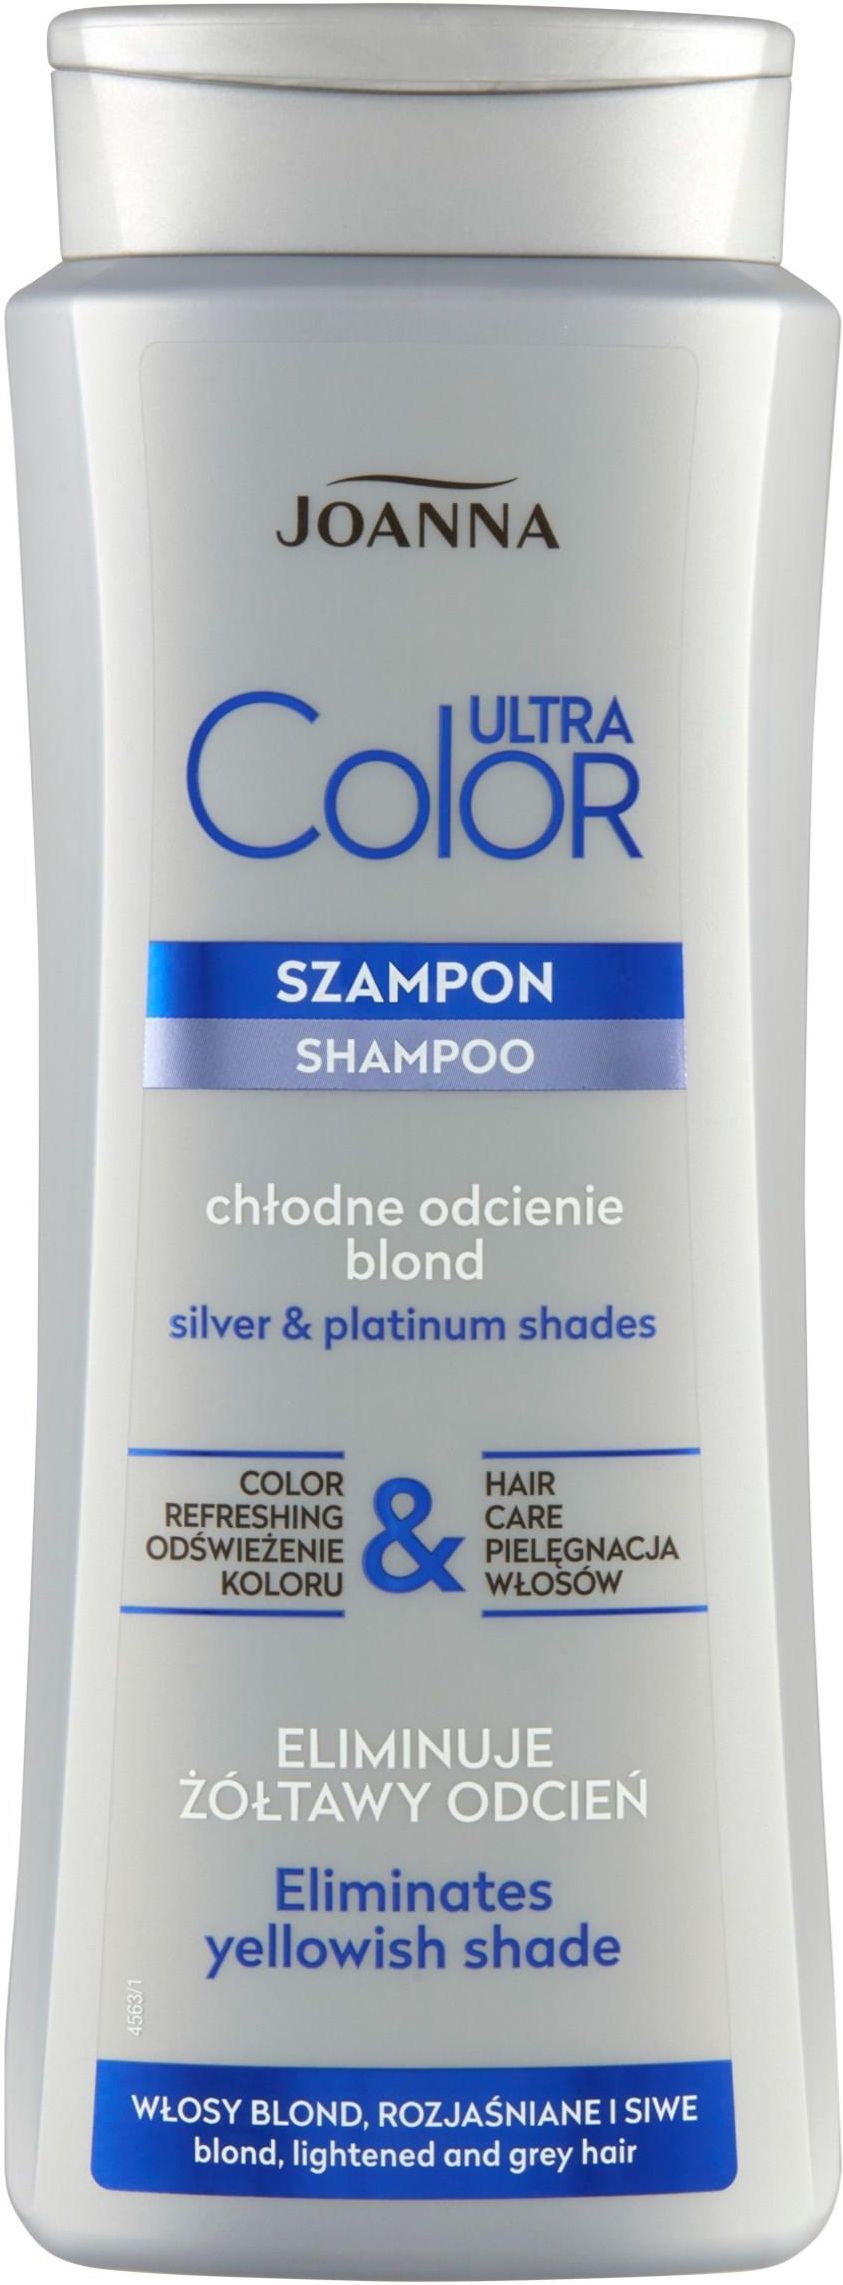 szampon chłodzący kolor blond